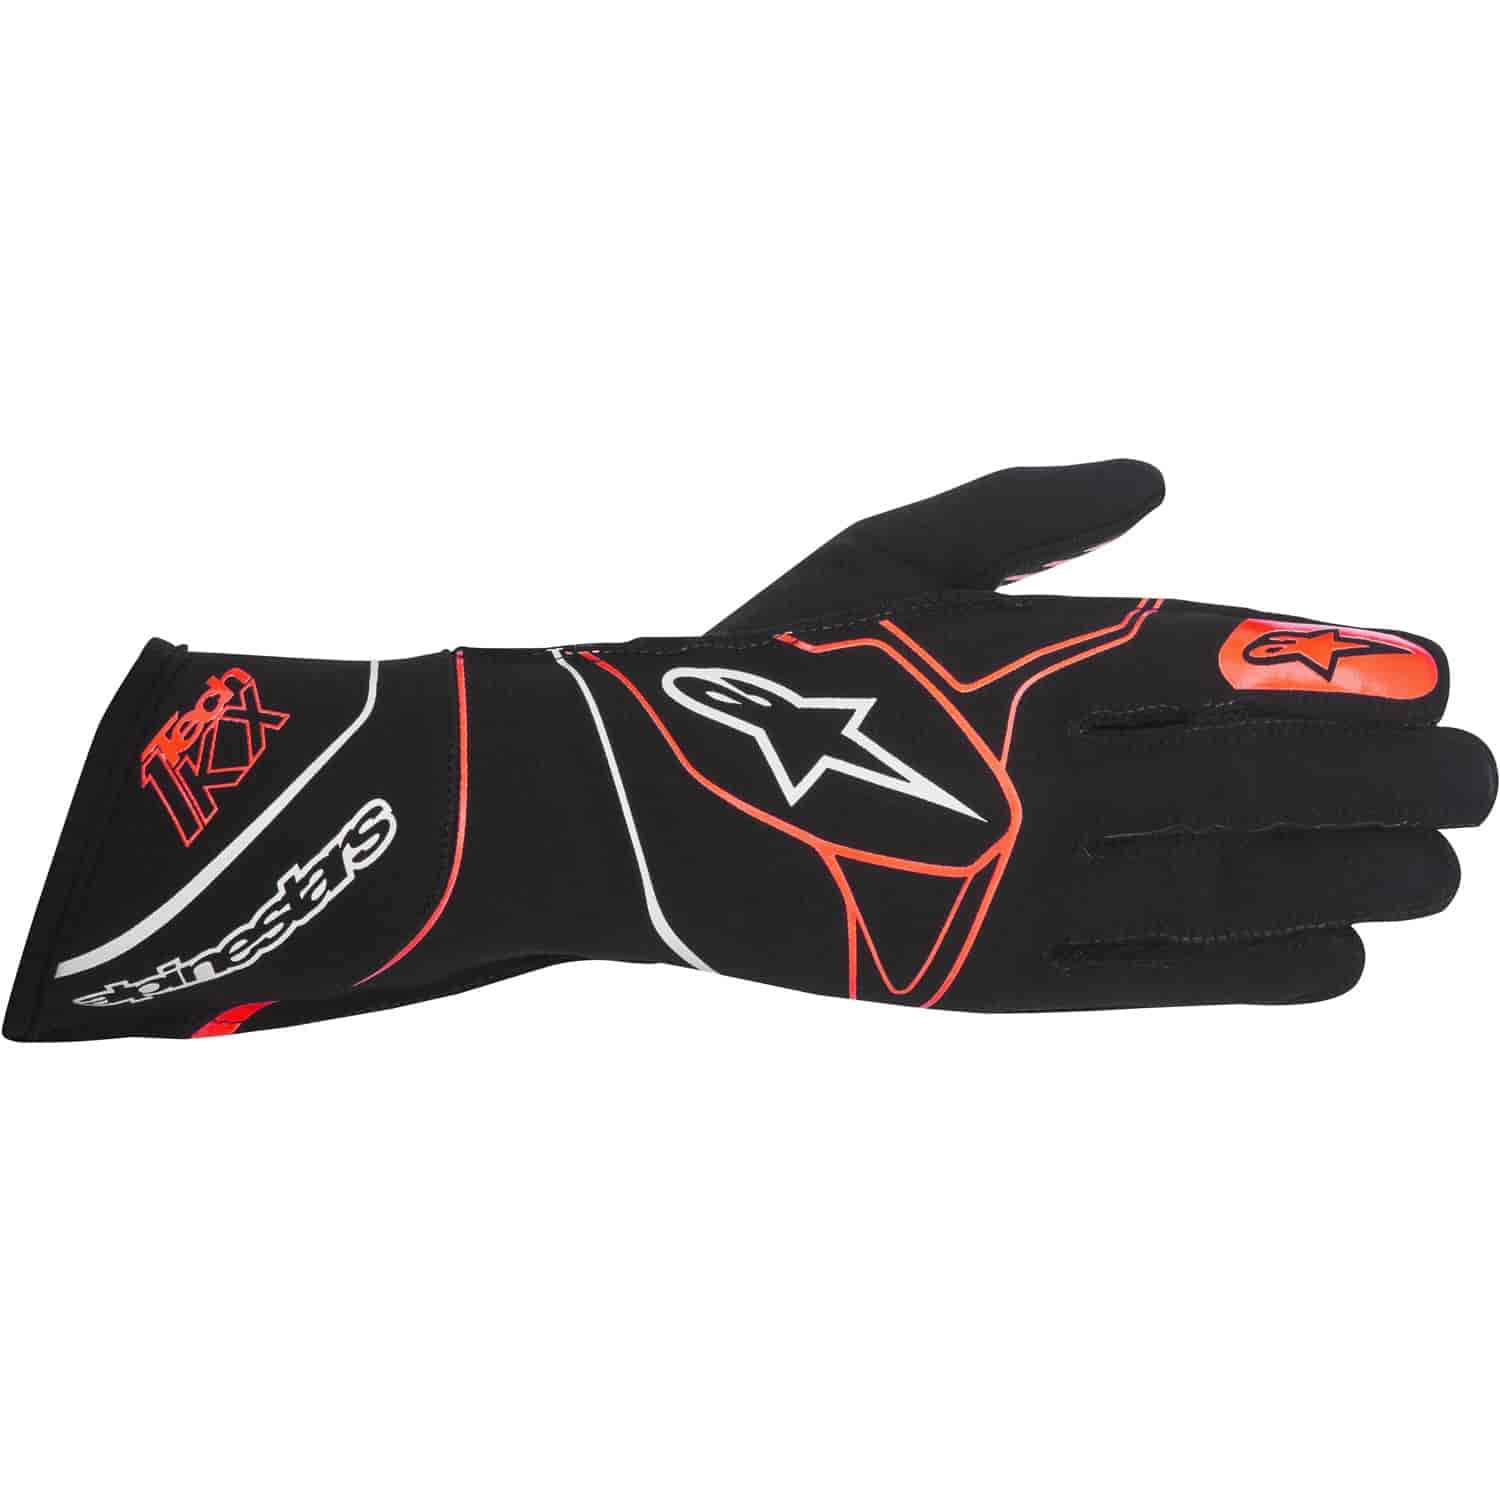 Tech 1-KX Gloves Black/Red